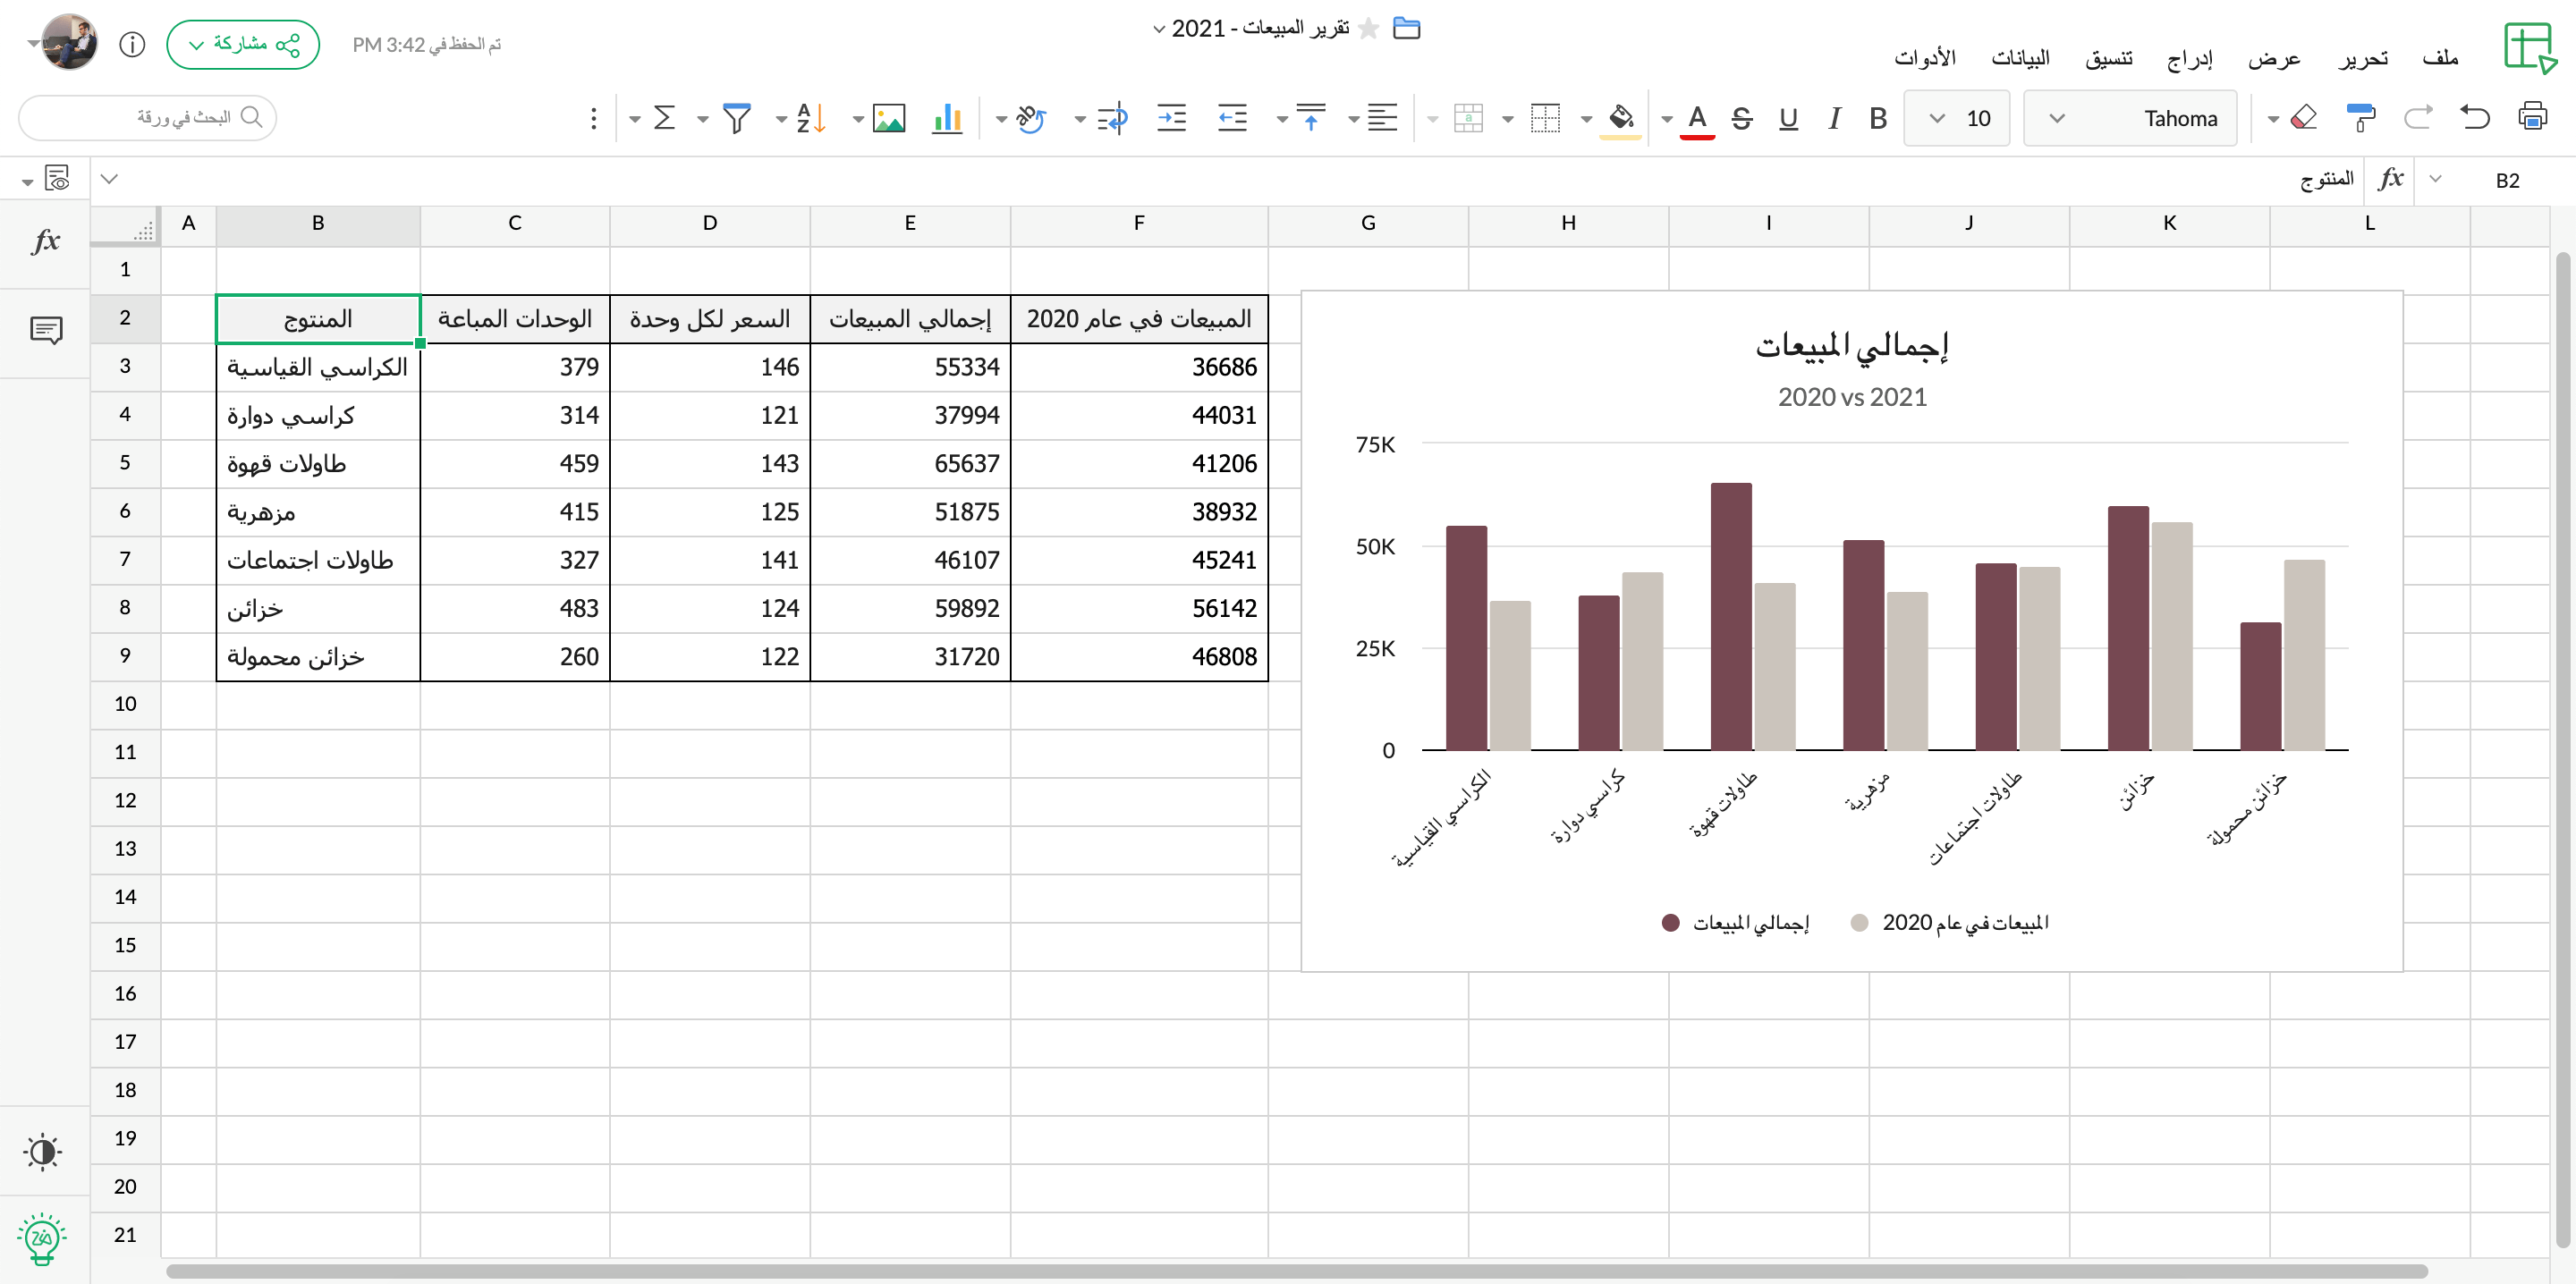 Arabic language support in Zoho Sheet